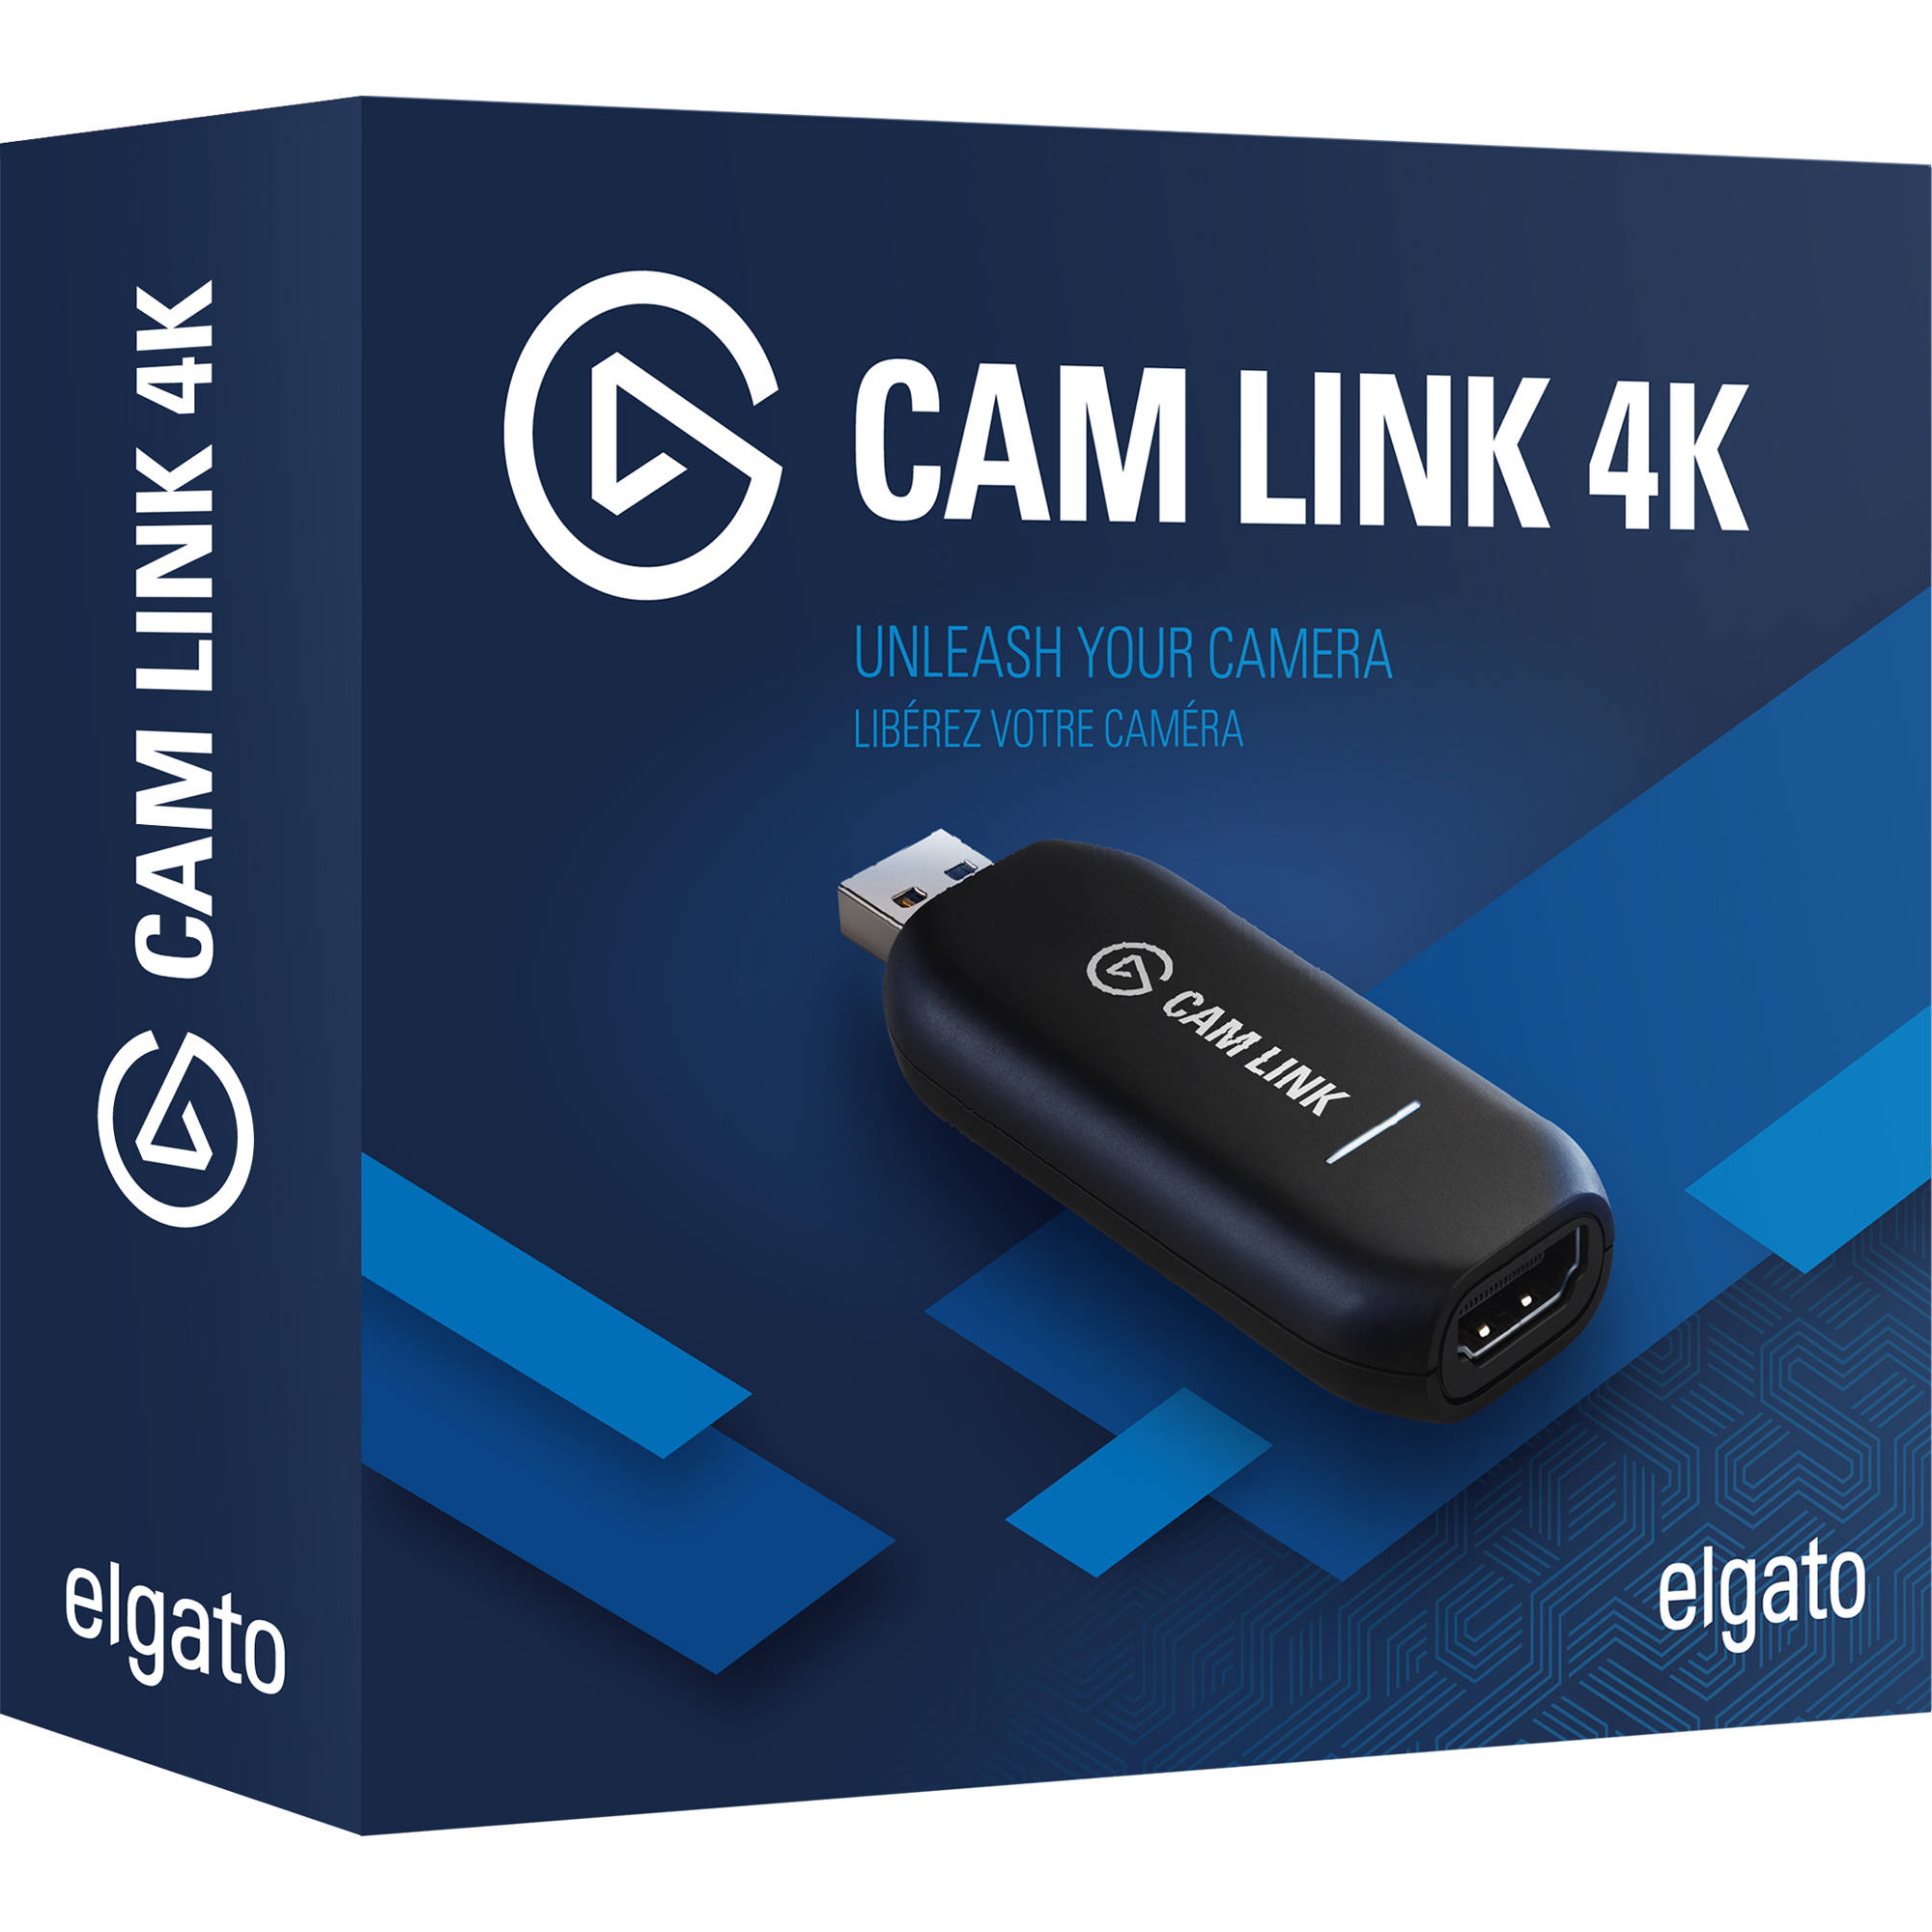 Elgato Cam Link 4k 10gam9901 B H Photo Video